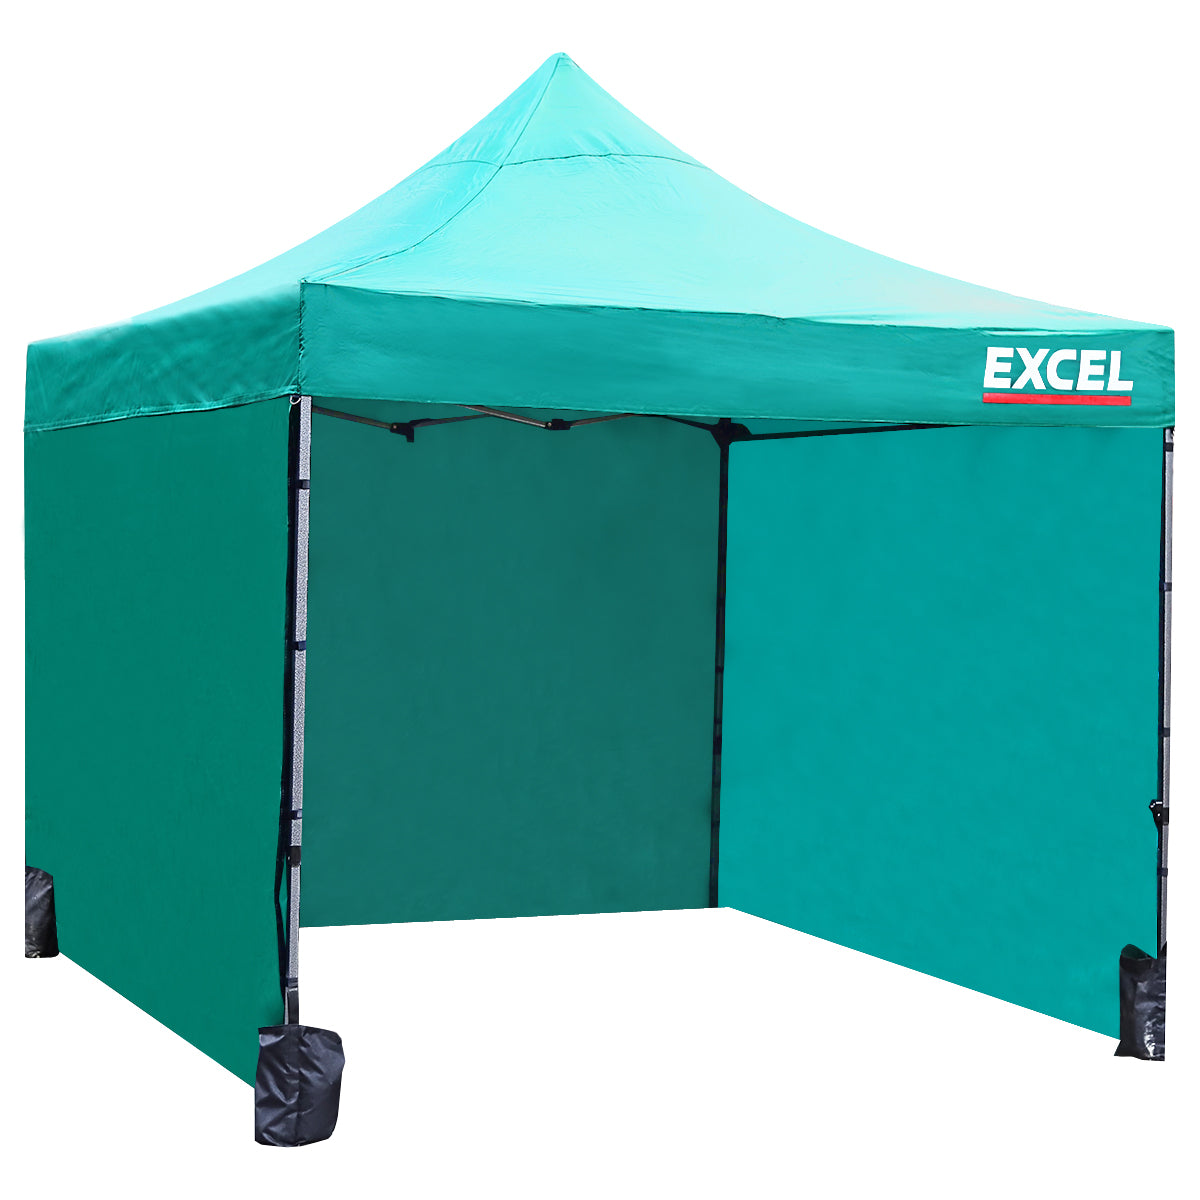 Excel Steel Gazebo 3m x 3m Green with Wheel Bag, Wall panel, Sand Bag, Rope & Pegs